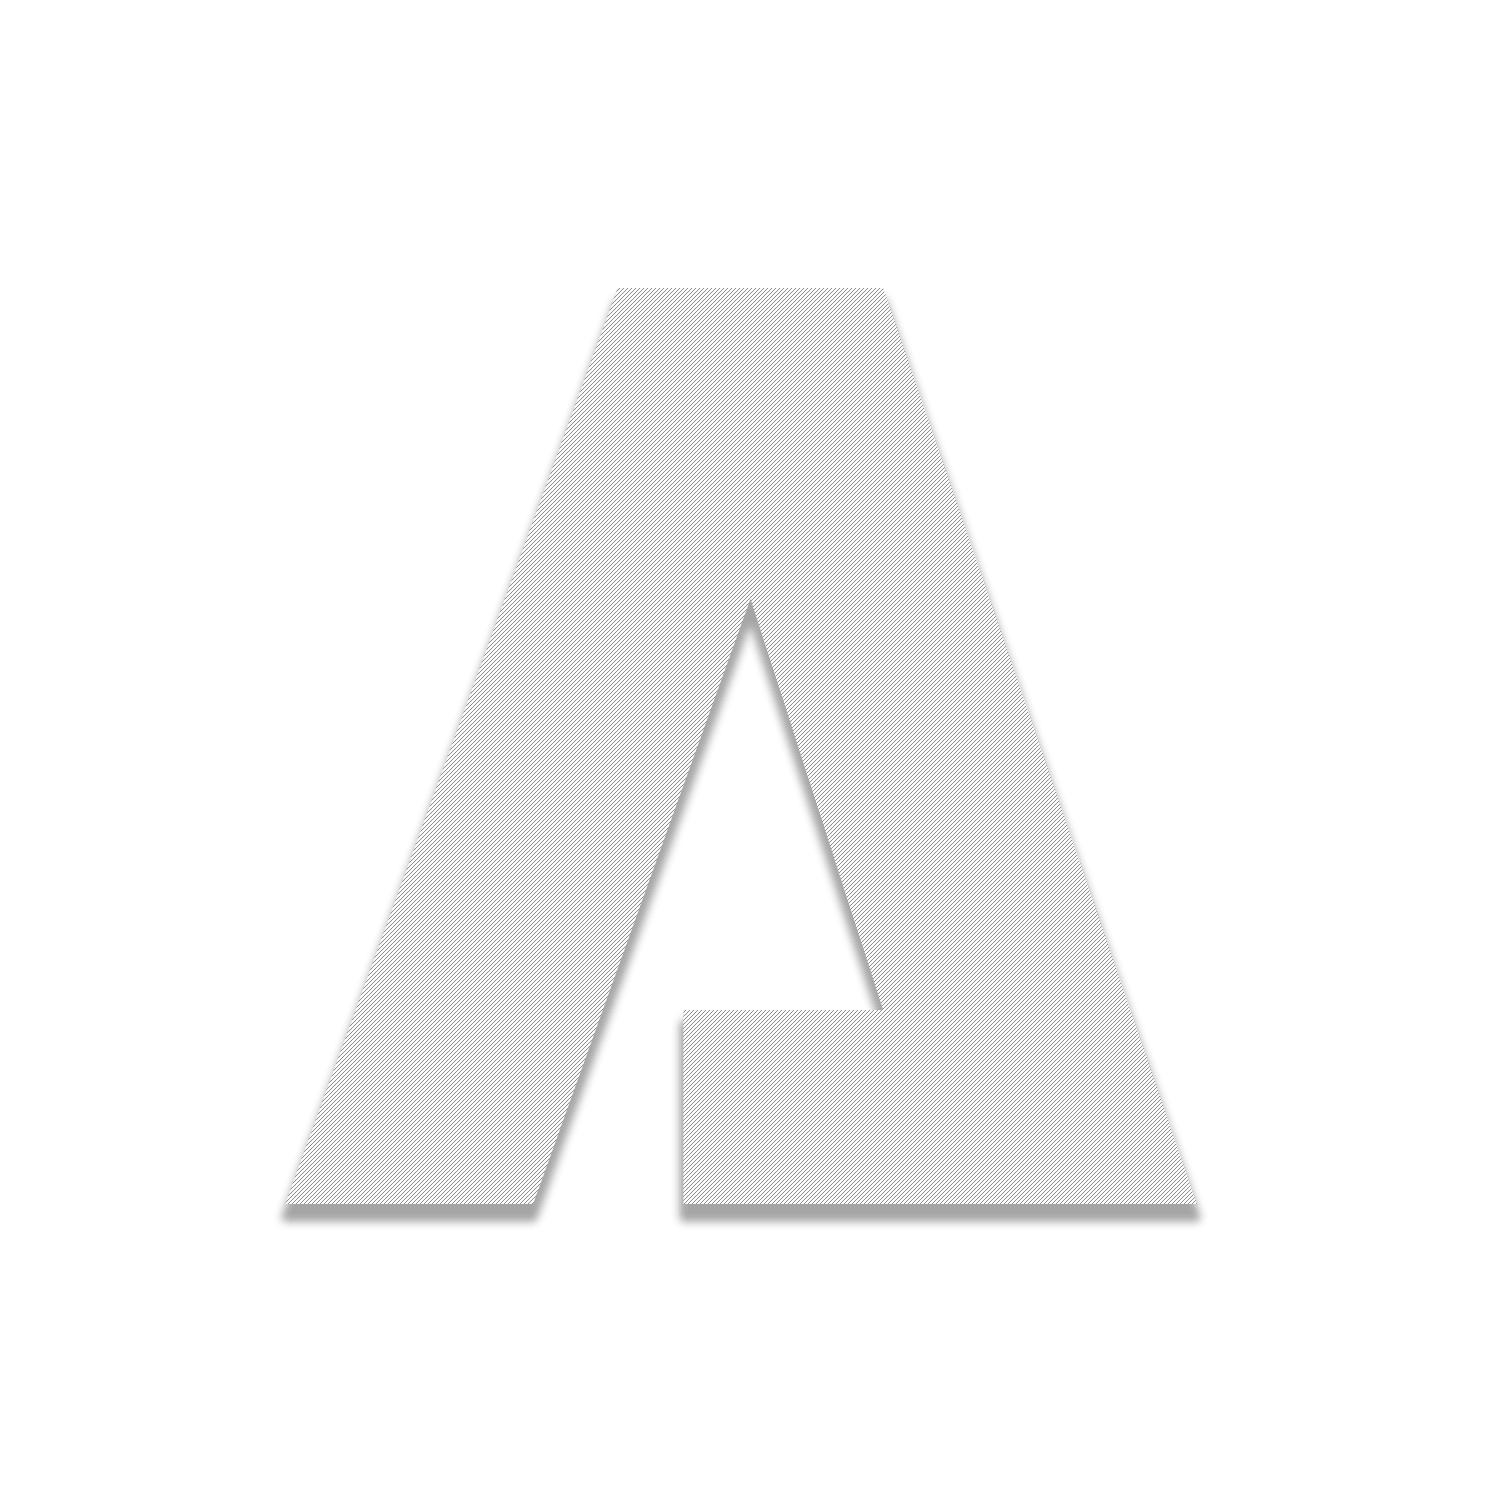 The Aristois logo